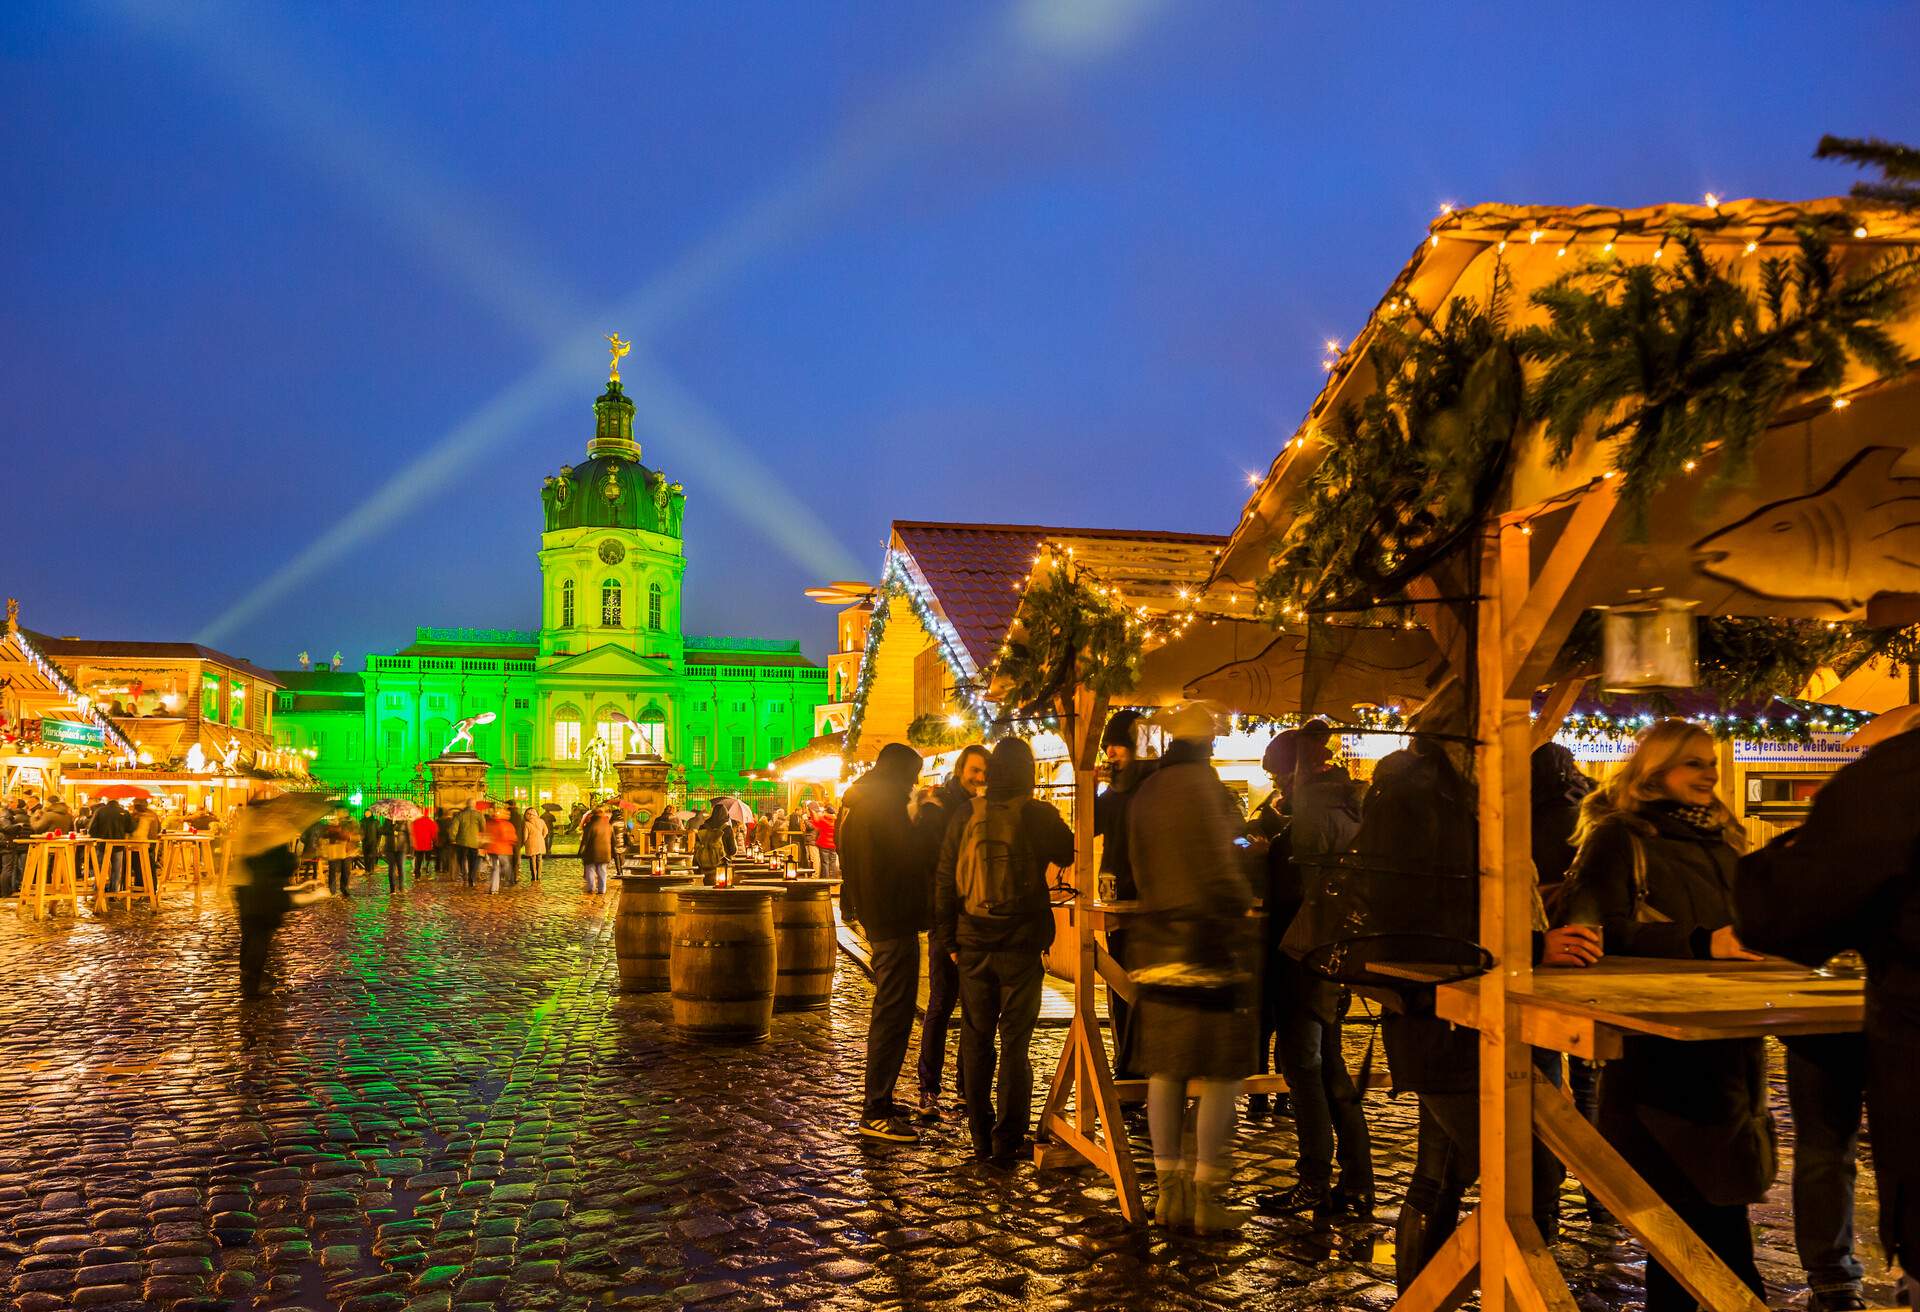 Germany, Berlin. Christmas market at Schloss Charlottenburg, on the background the Alte Schloss (Old Castle).